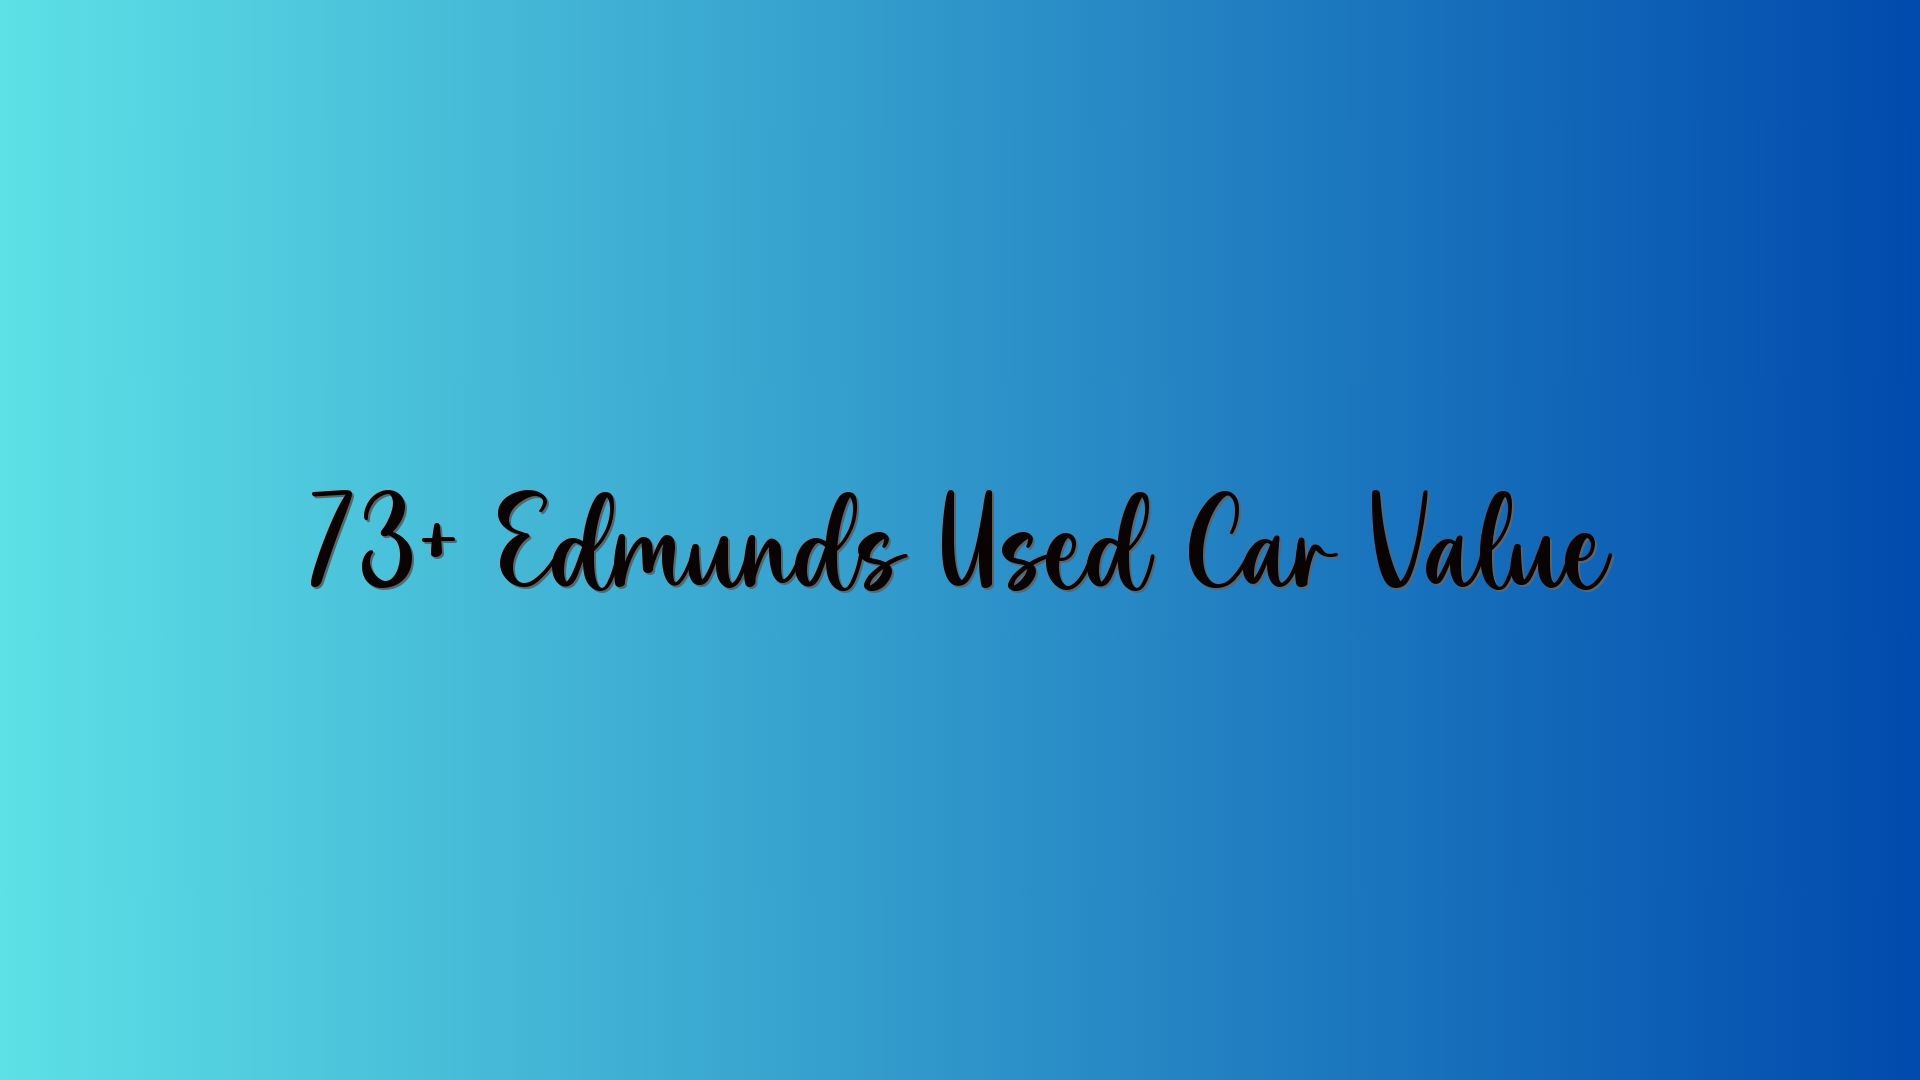 73+ Edmunds Used Car Value